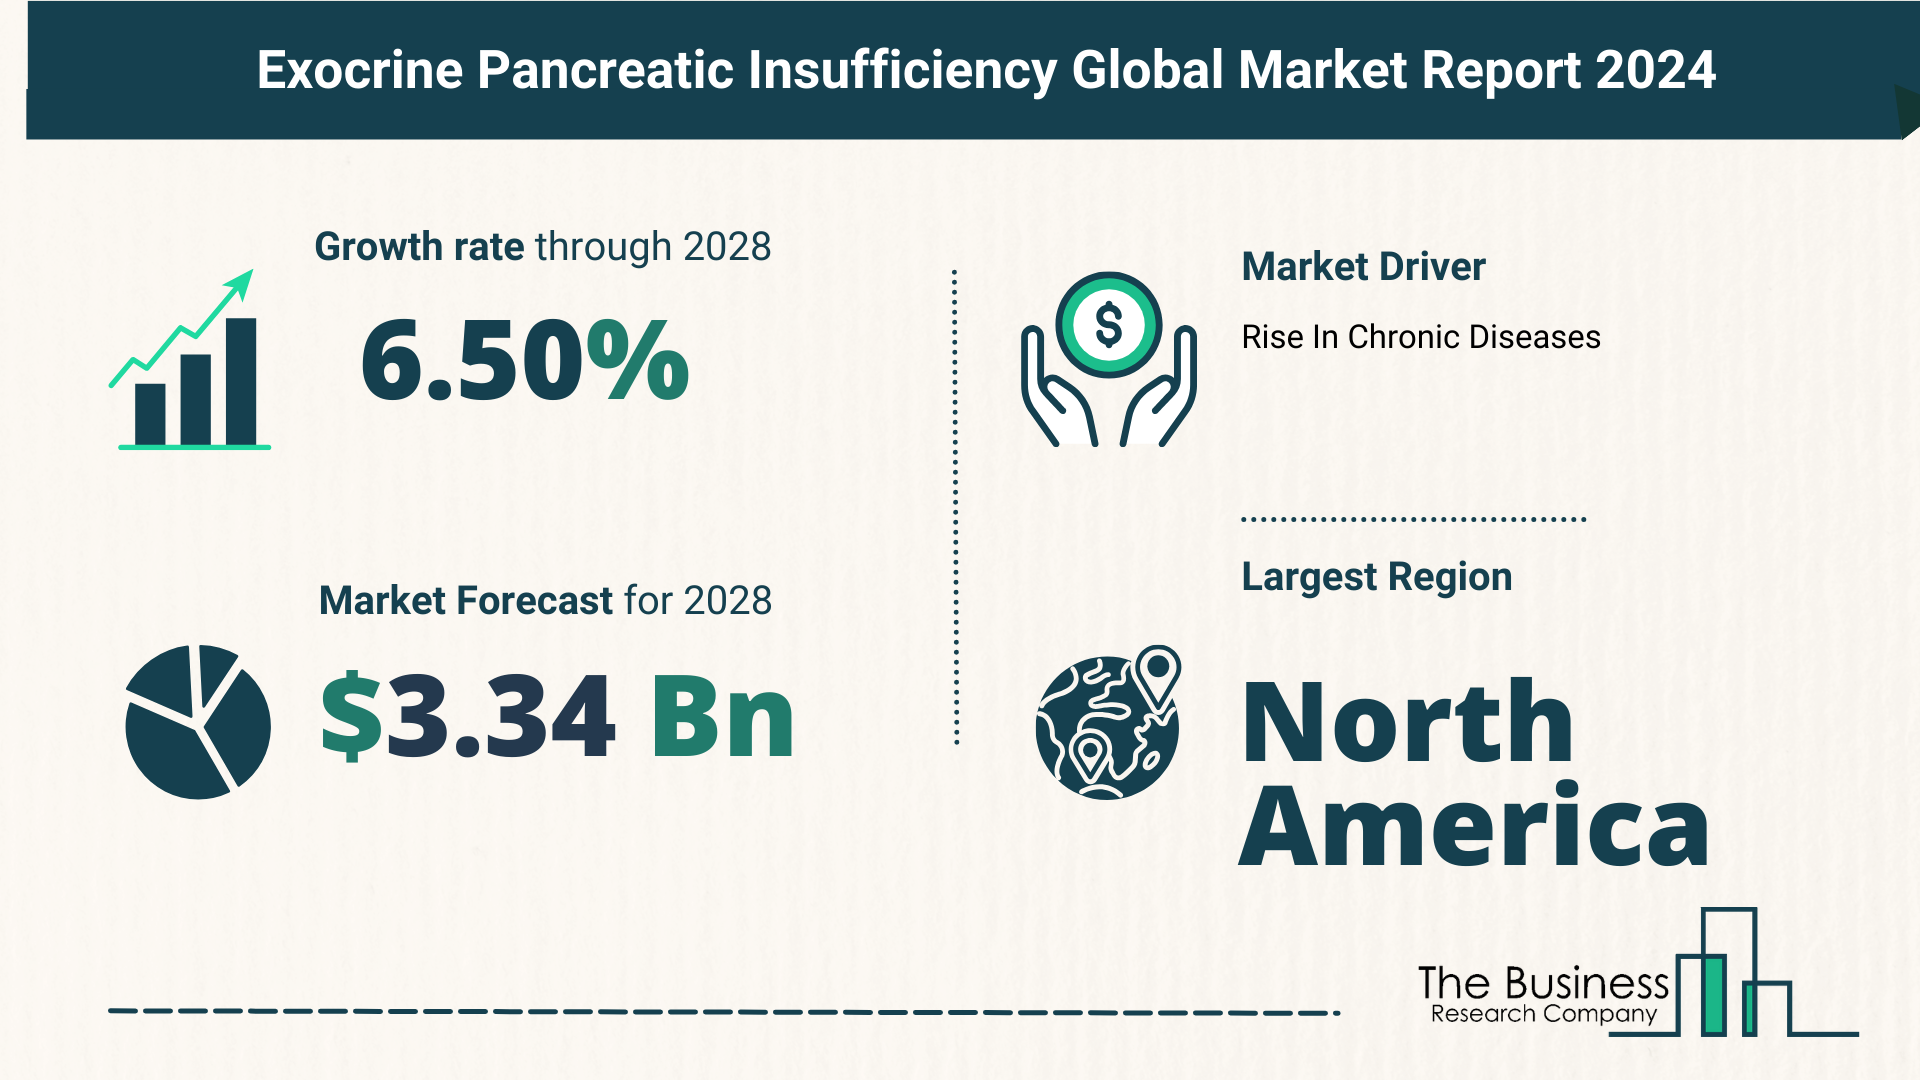 Global Exocrine Pancreatic Insufficiency Market